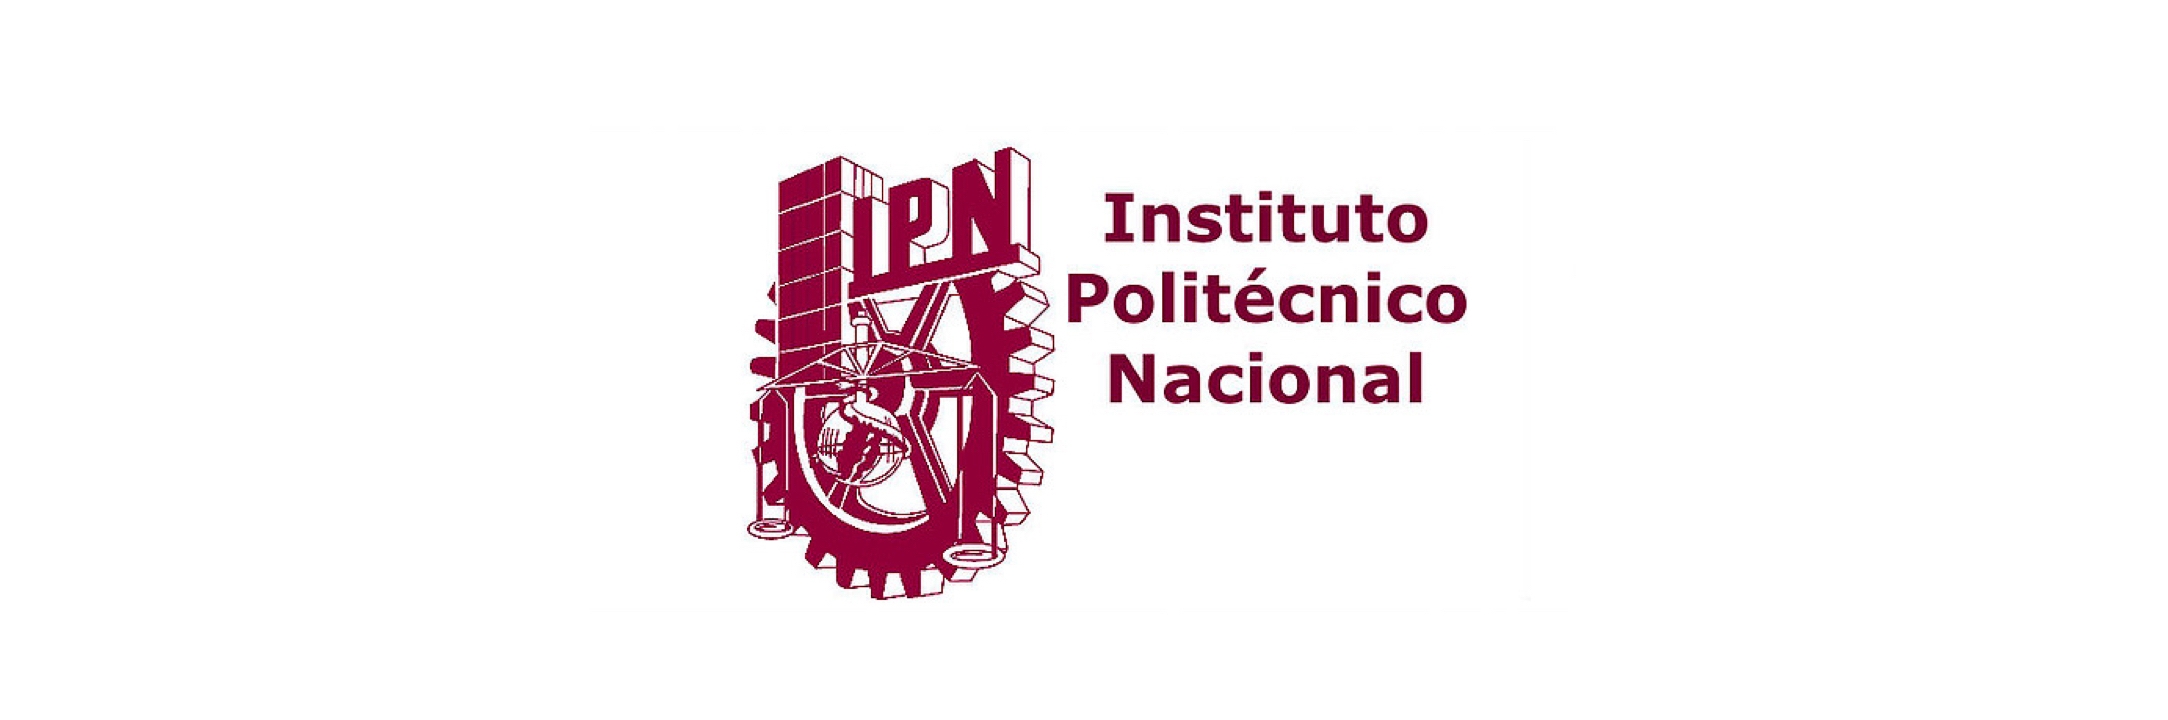 instituto politécnico nacional